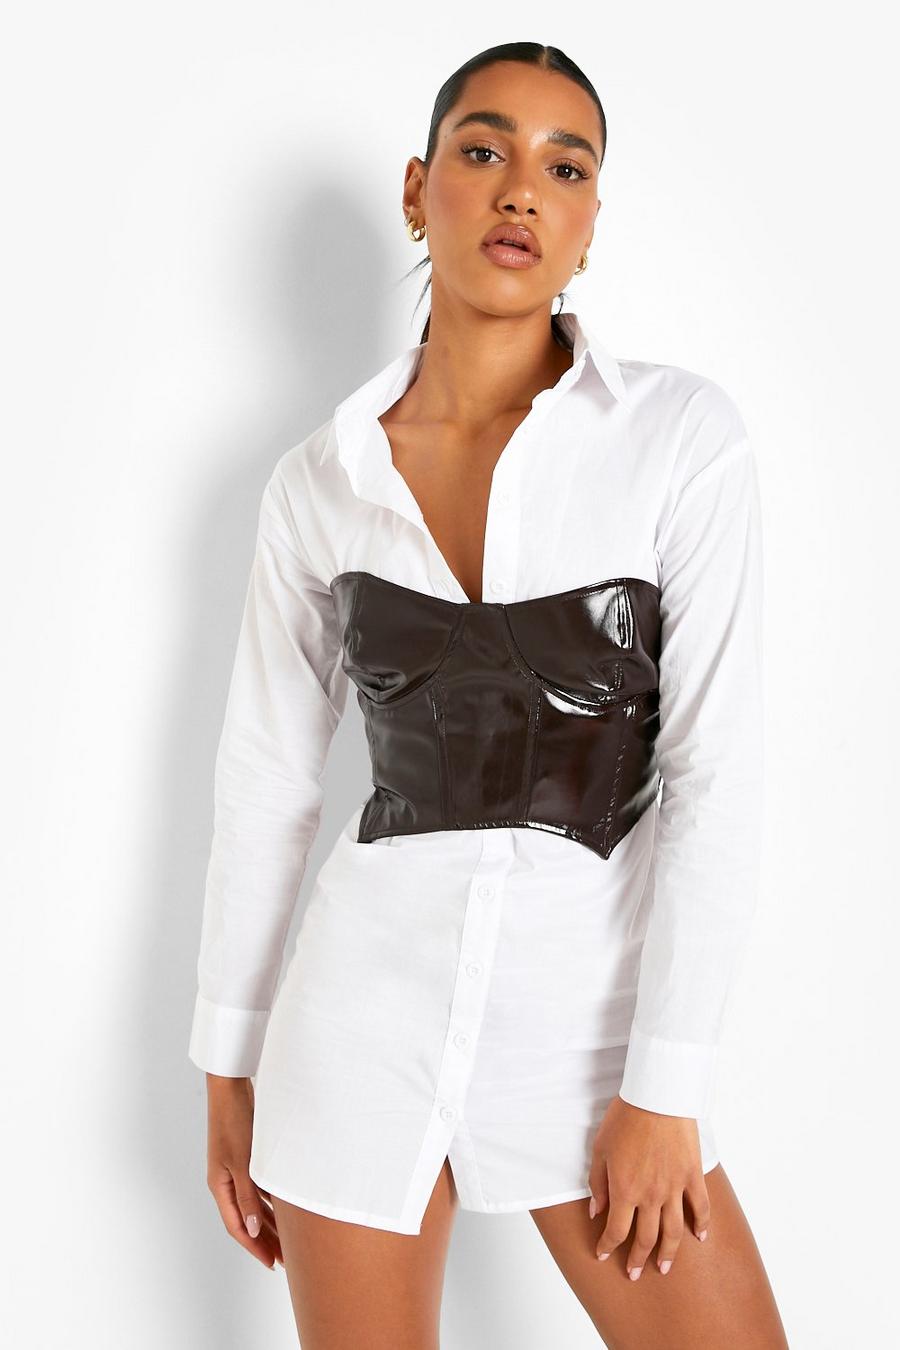 https://media.boohoo.com/i/boohoo/fzz29972_white_xl/female-white-corset-shirt-dress/?w=900&qlt=default&fmt.jp2.qlt=70&fmt=auto&sm=fit